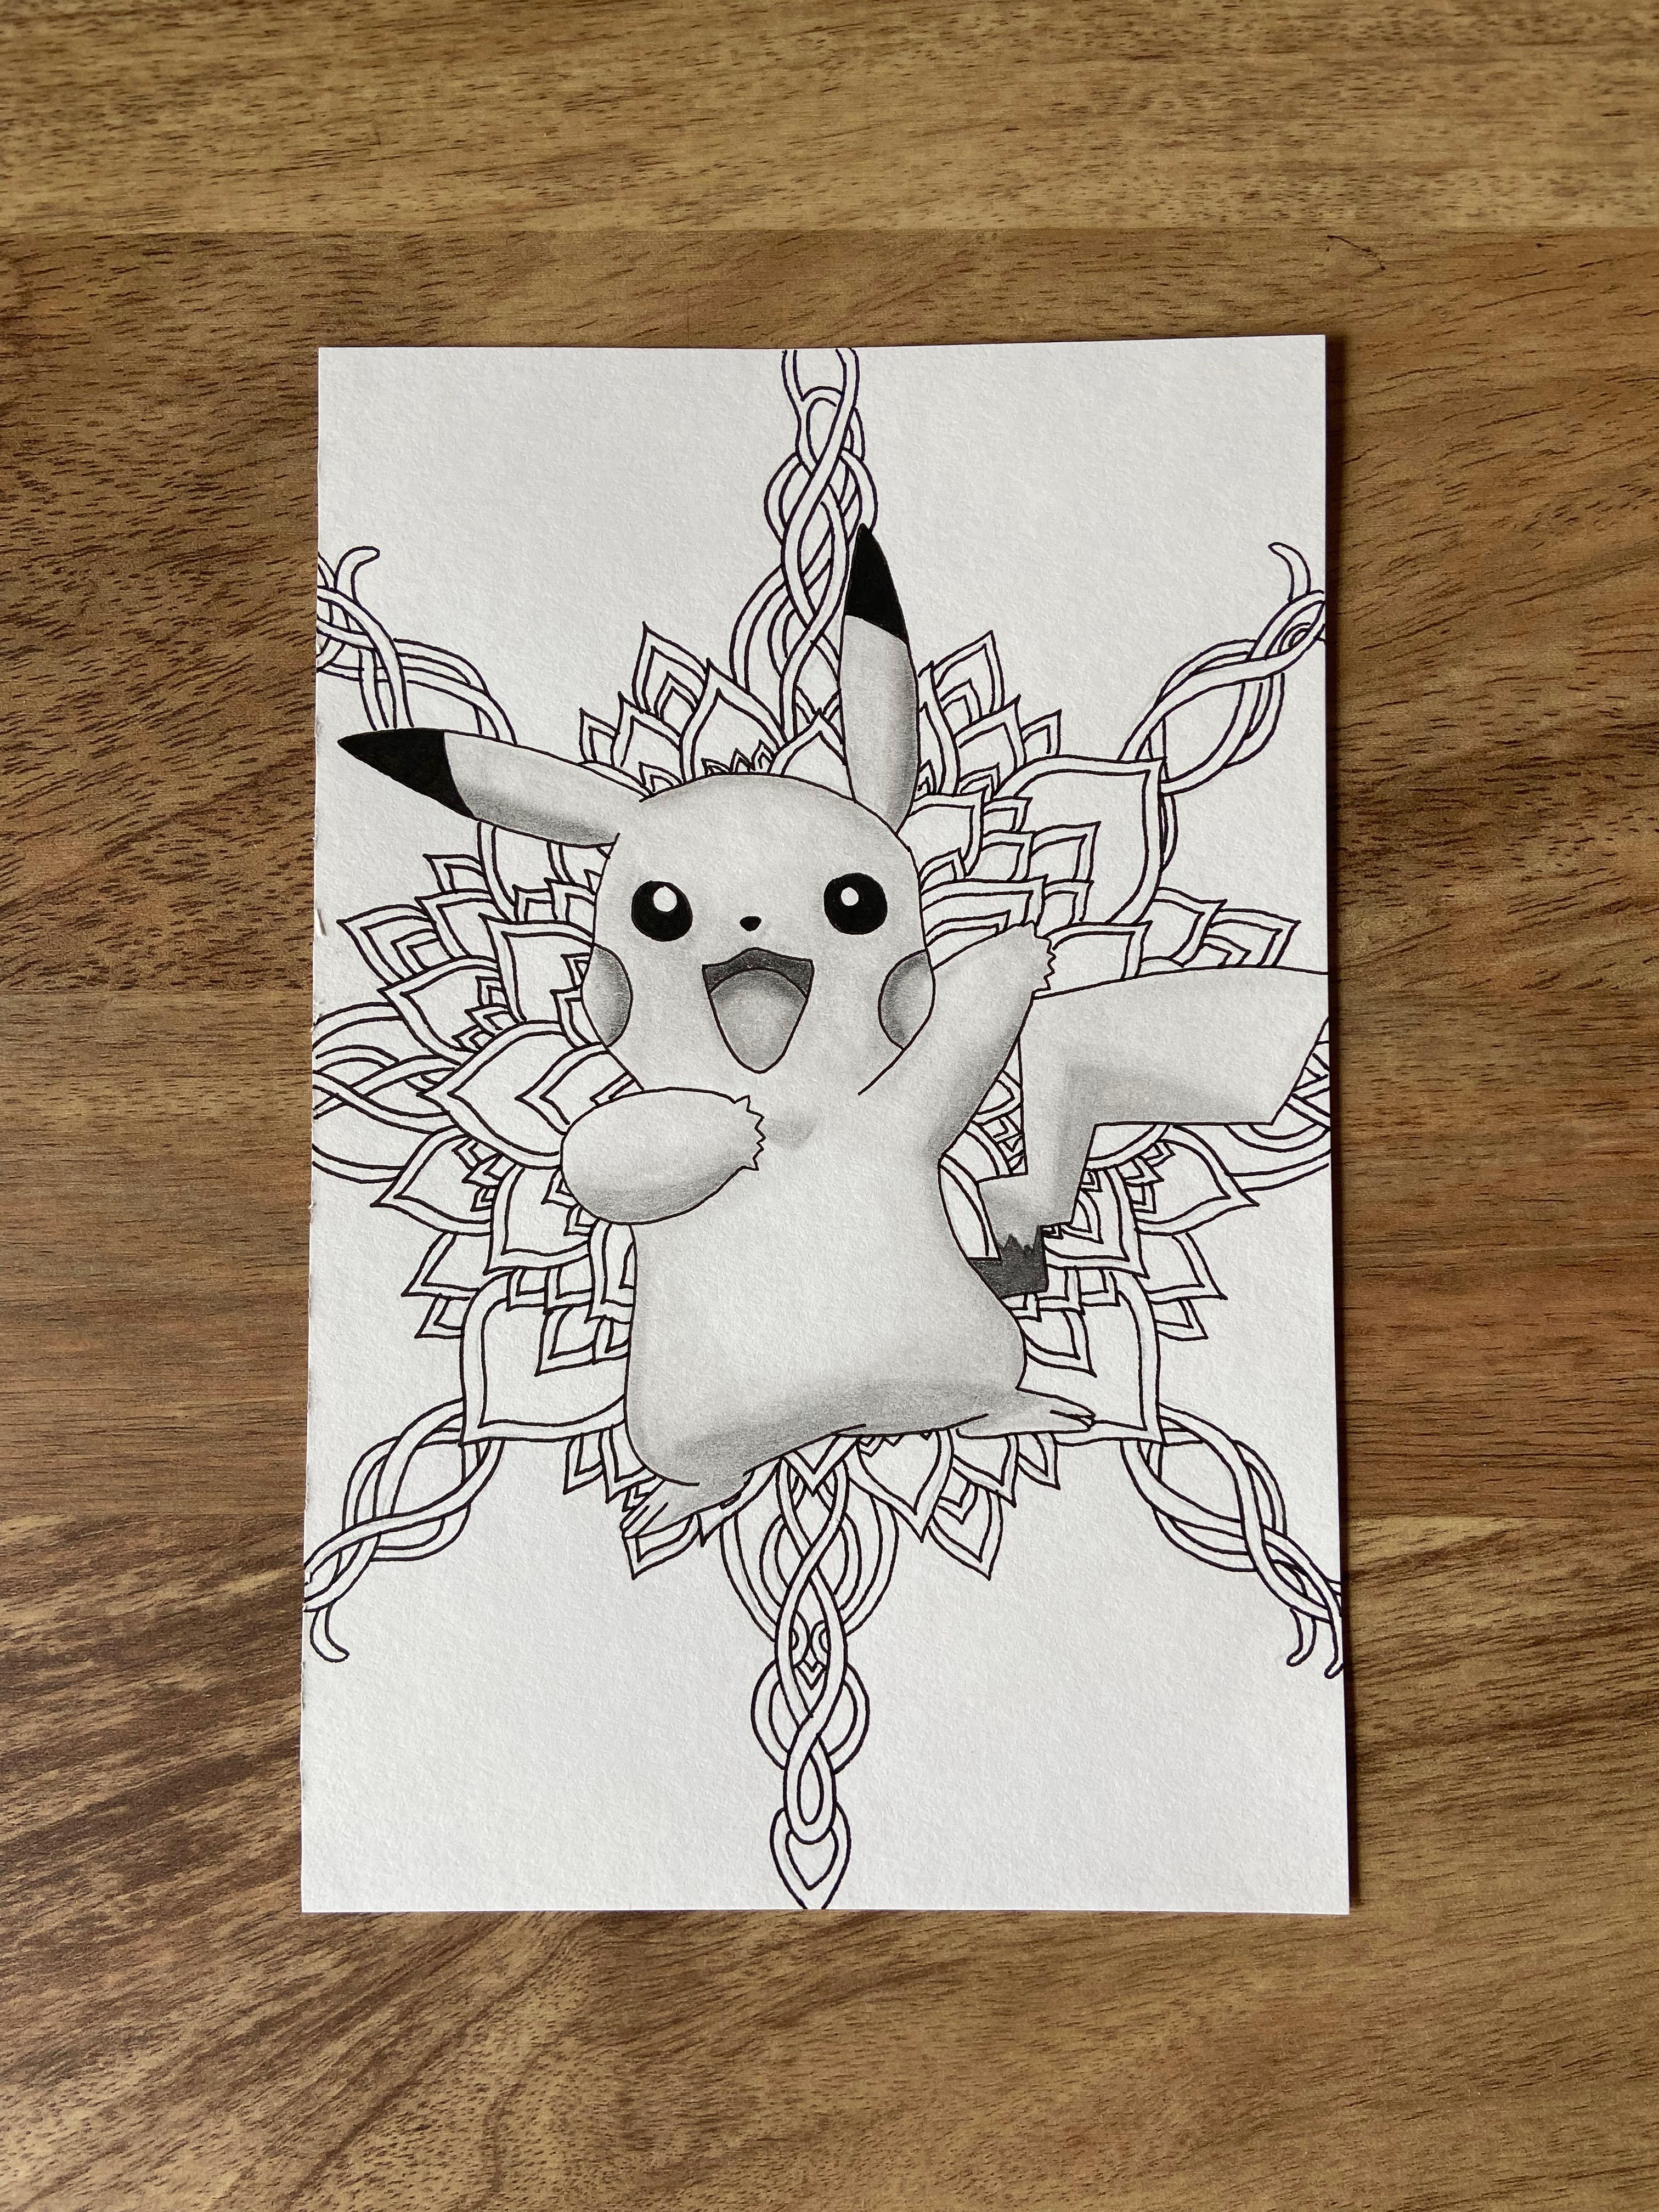 Pencil drawing of the Pokemon Pikachu